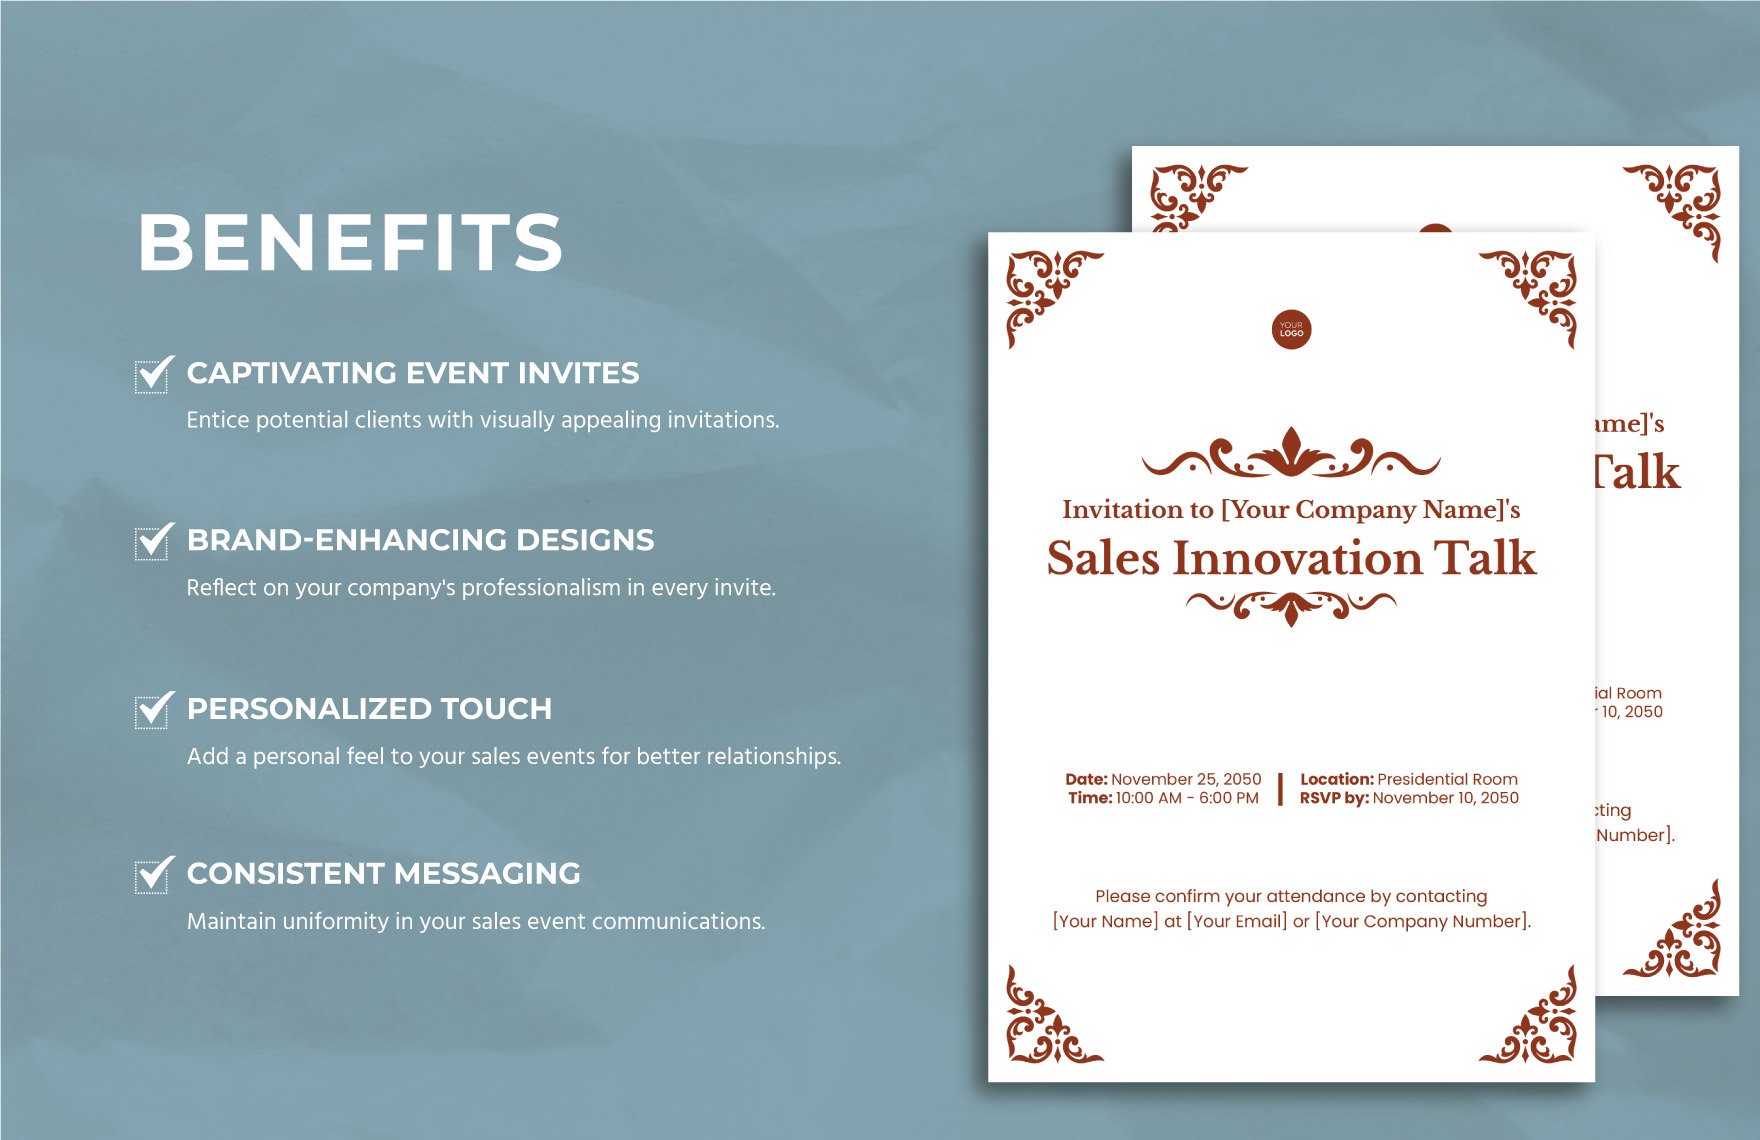 Sales Innovation Talk Invitation Card Template